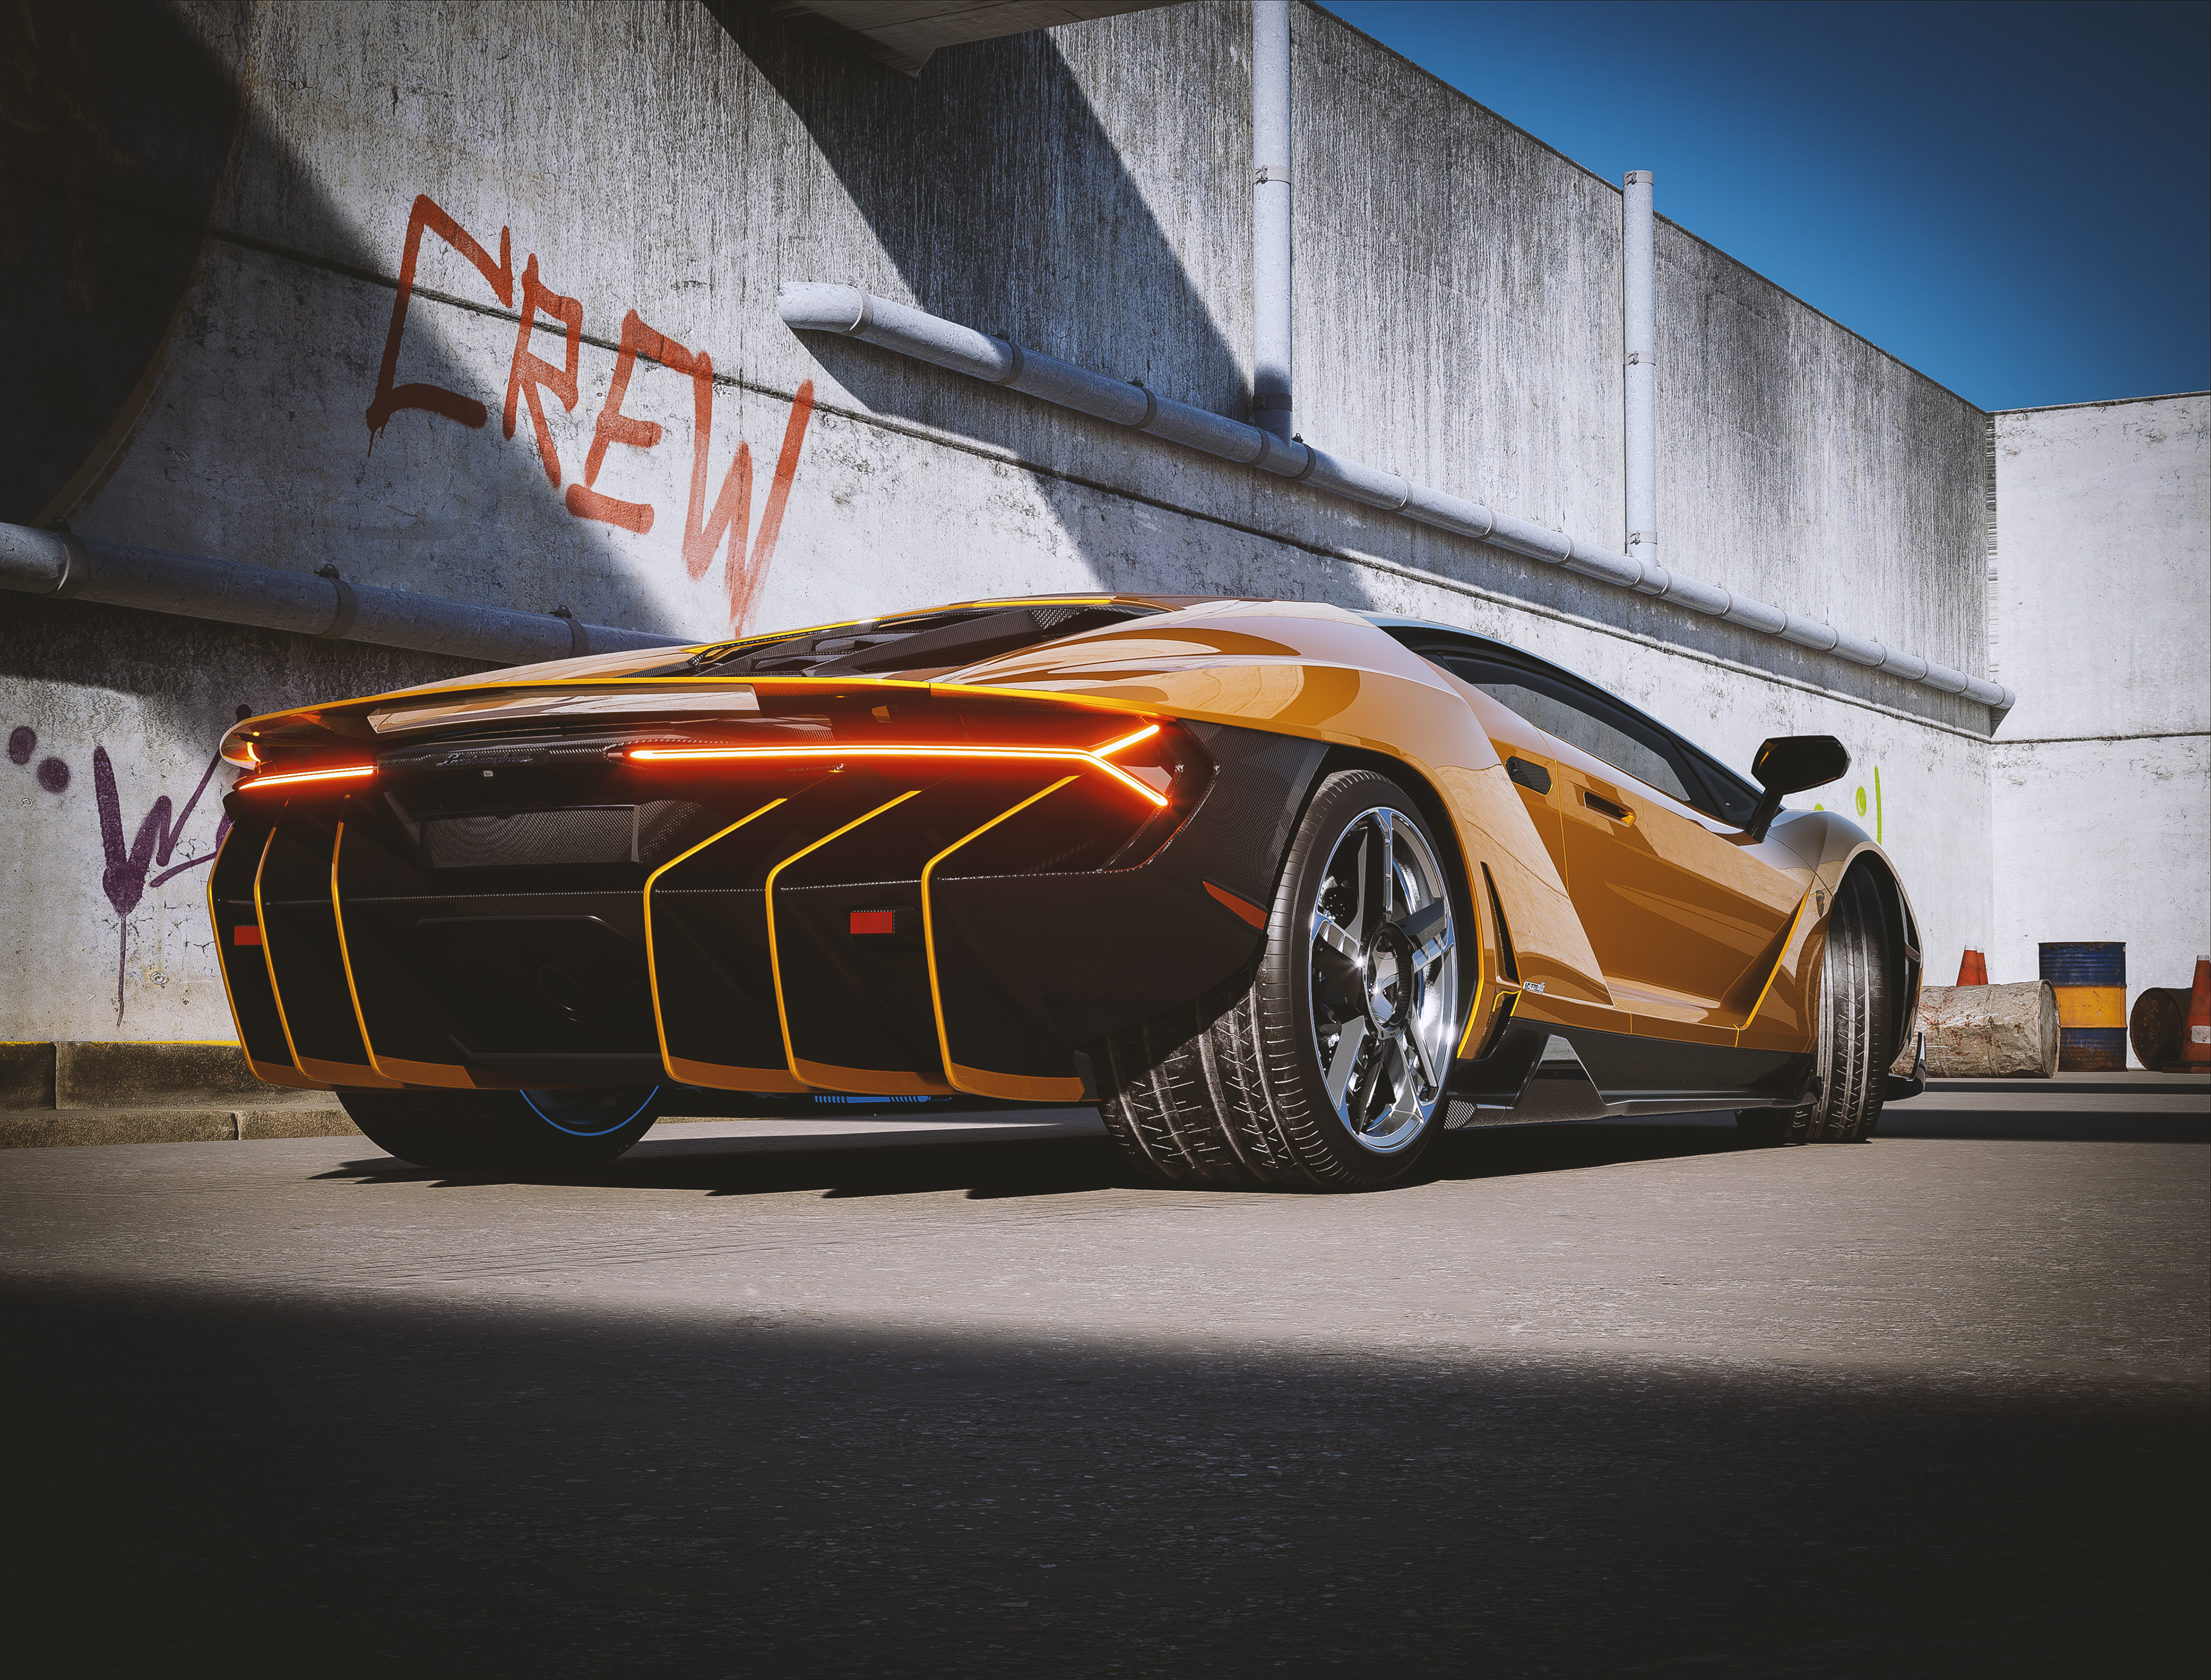 Lamborghini Centenario Yellow Cgi Rear 4k, HD Cars, 4k Wallpaper, Image, Background, Photo and Picture